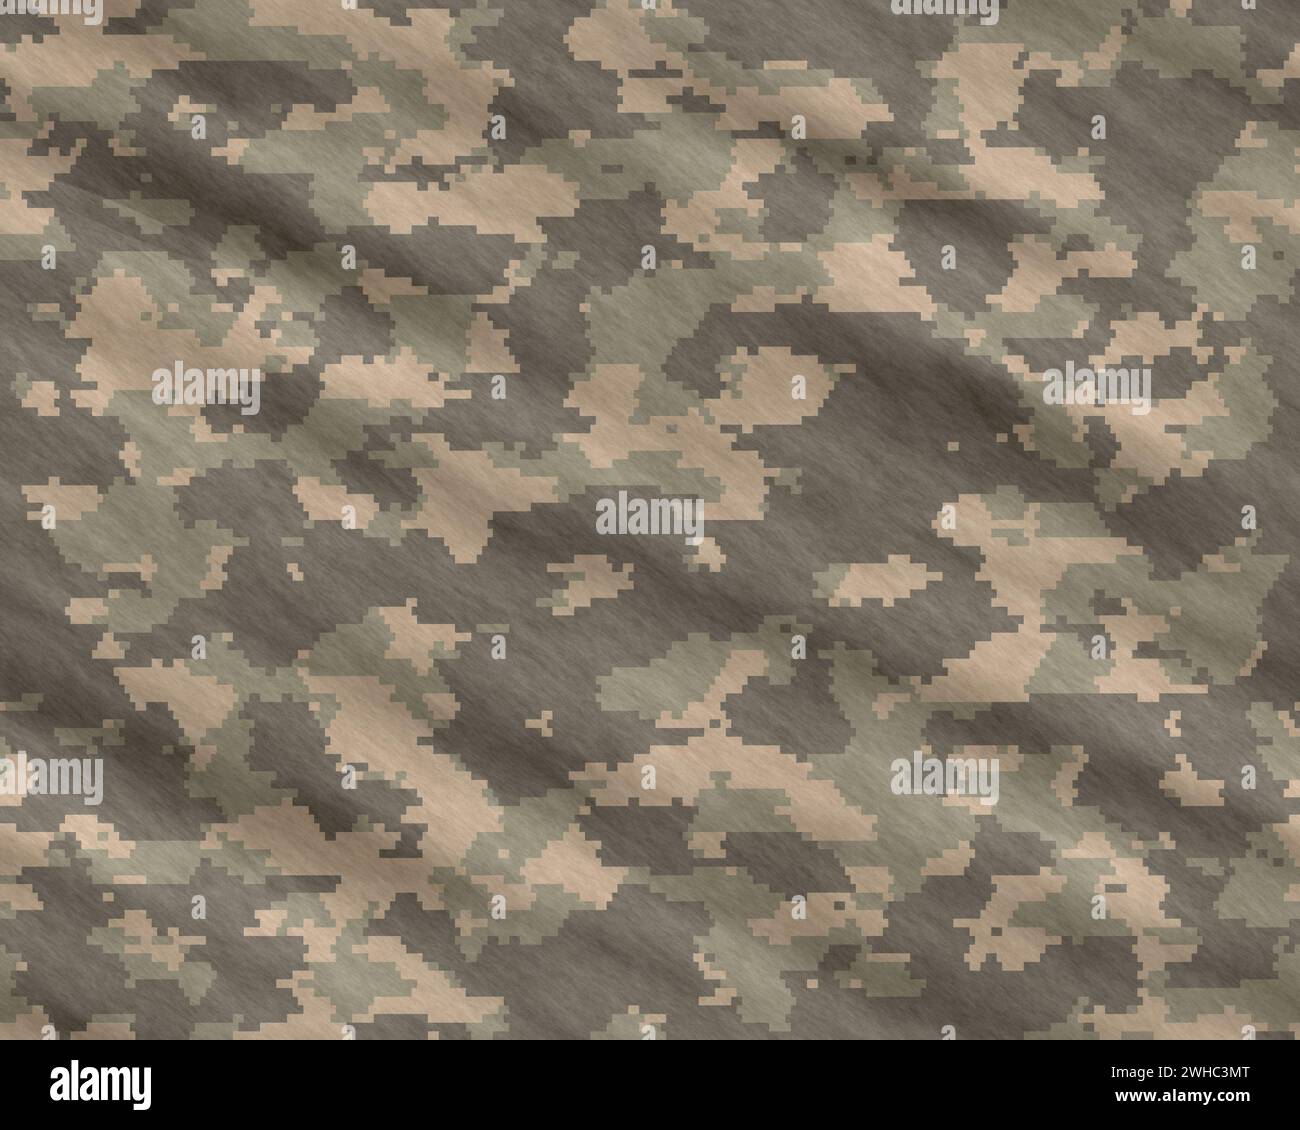 Digital camoflage camo background Stock Photo